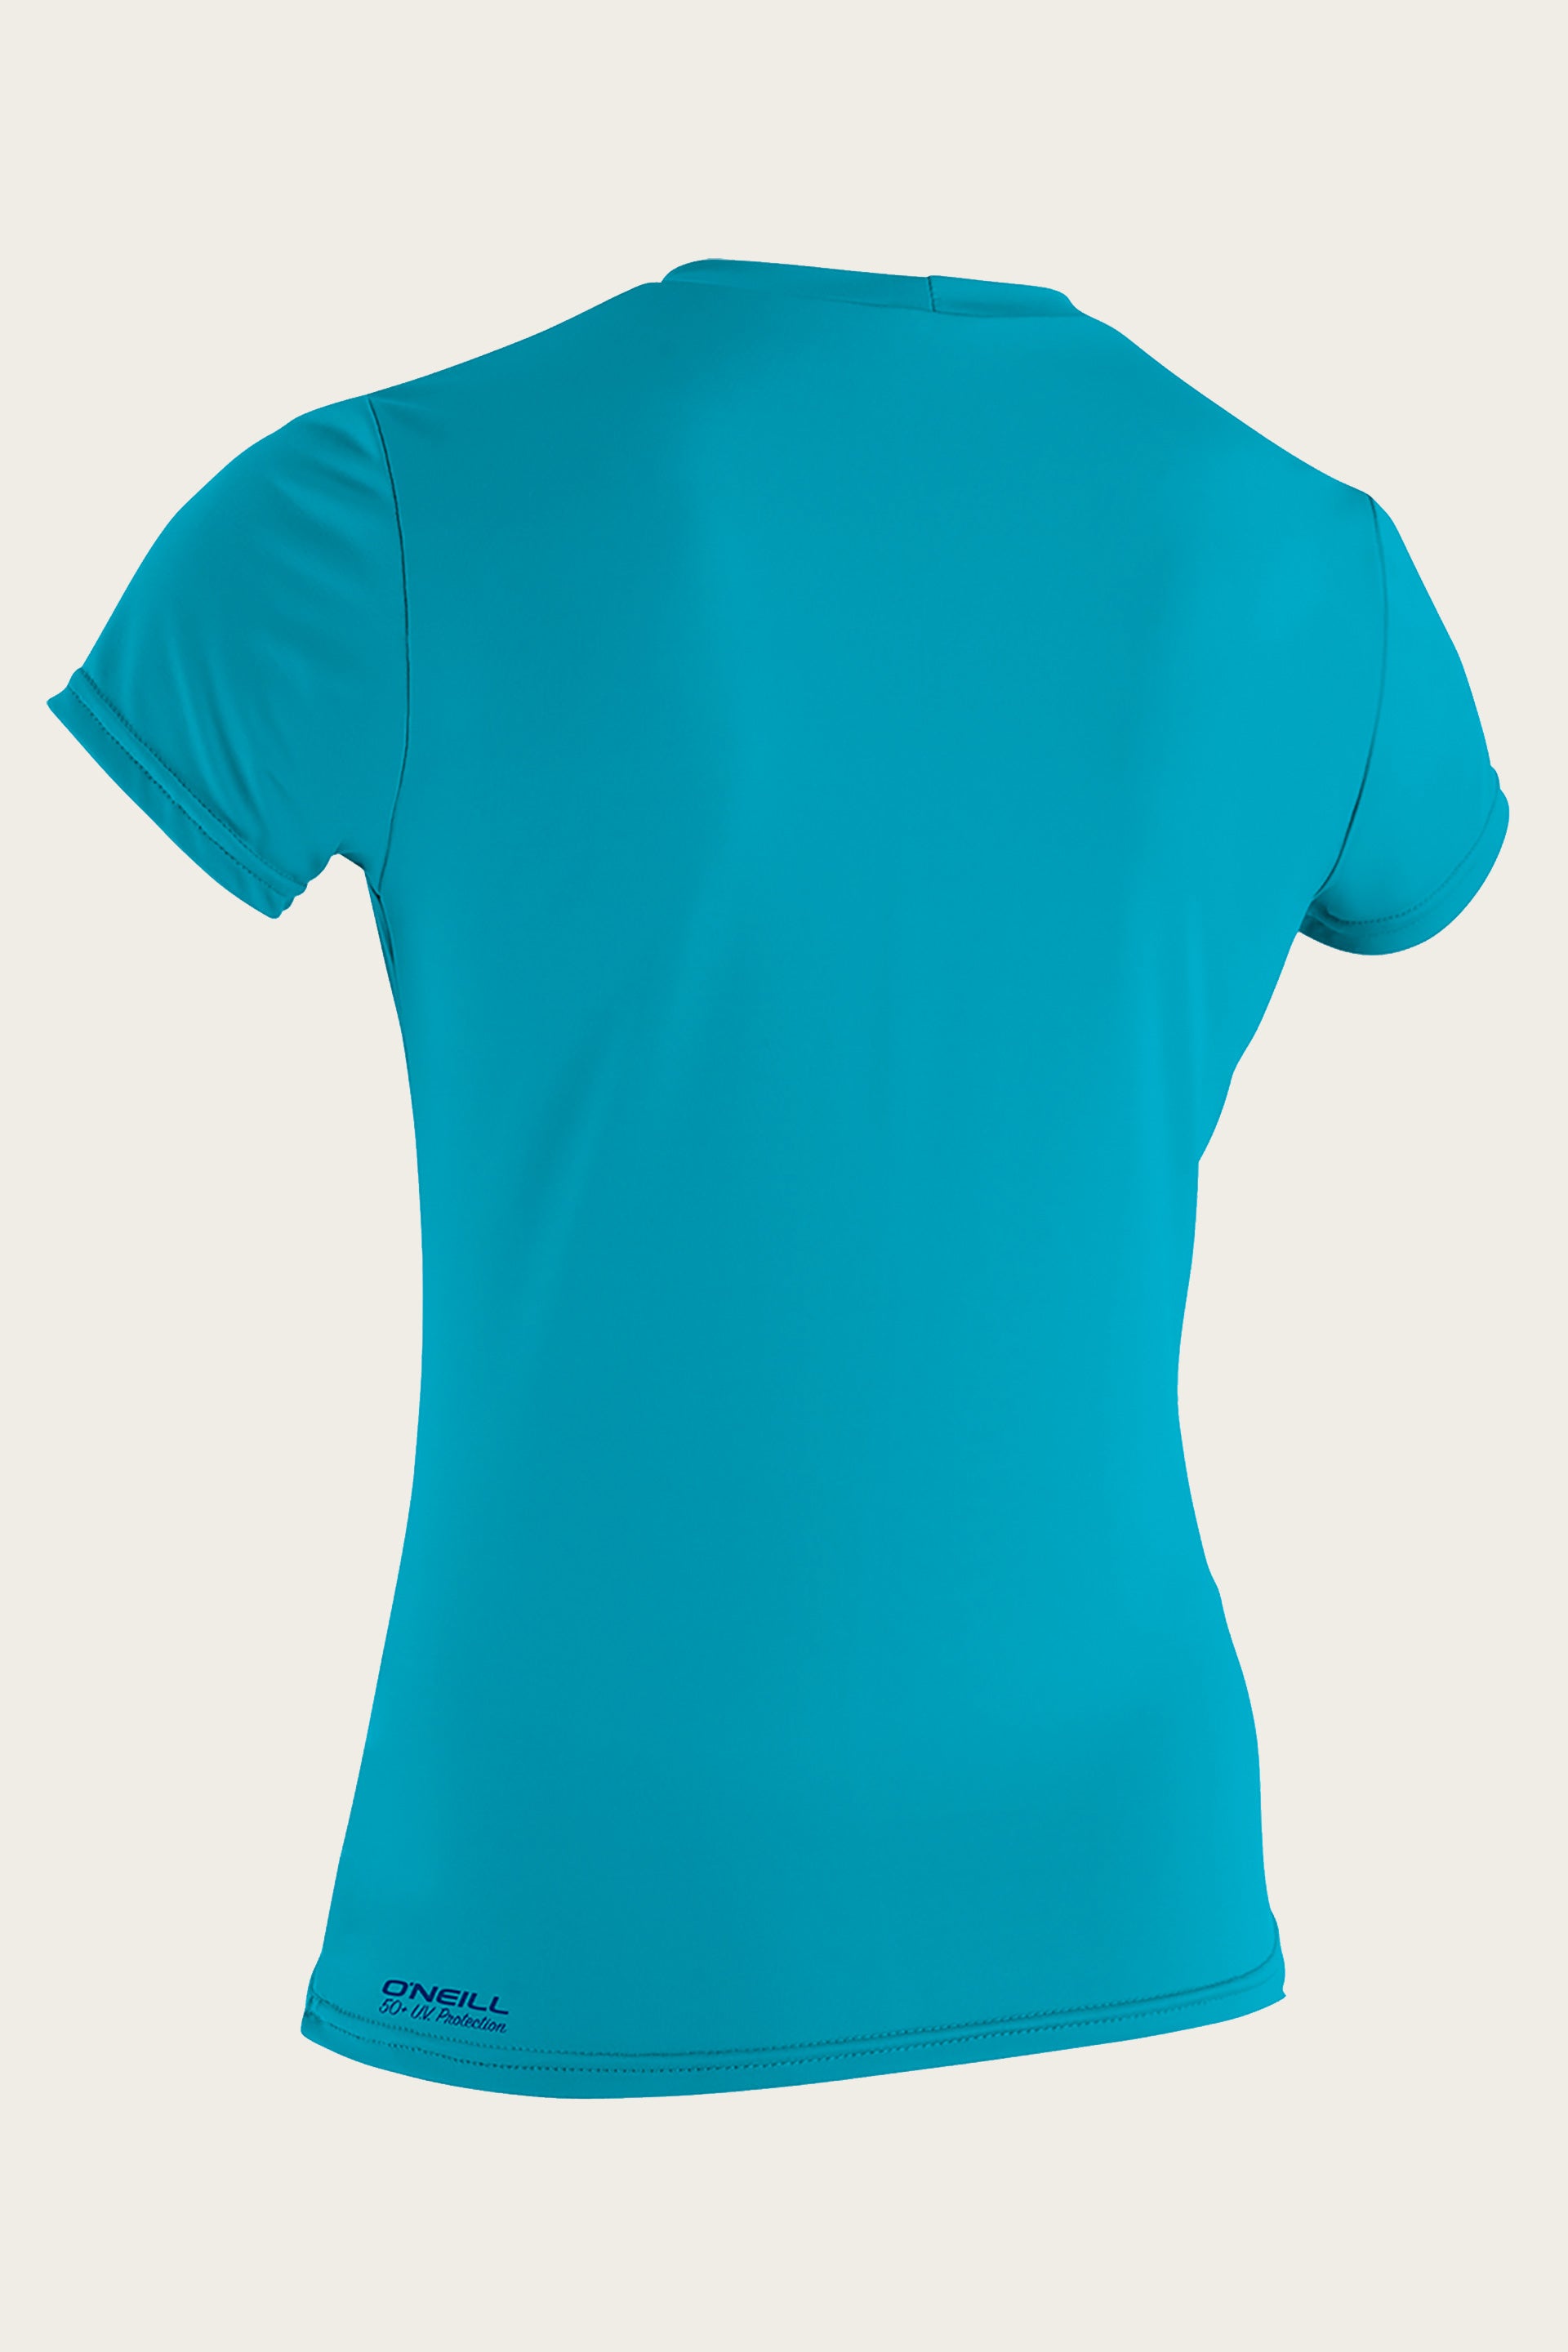 O Neill Women S Basic Skins UPF 30 Short Sleeve Sun Shirt Turquoise XL